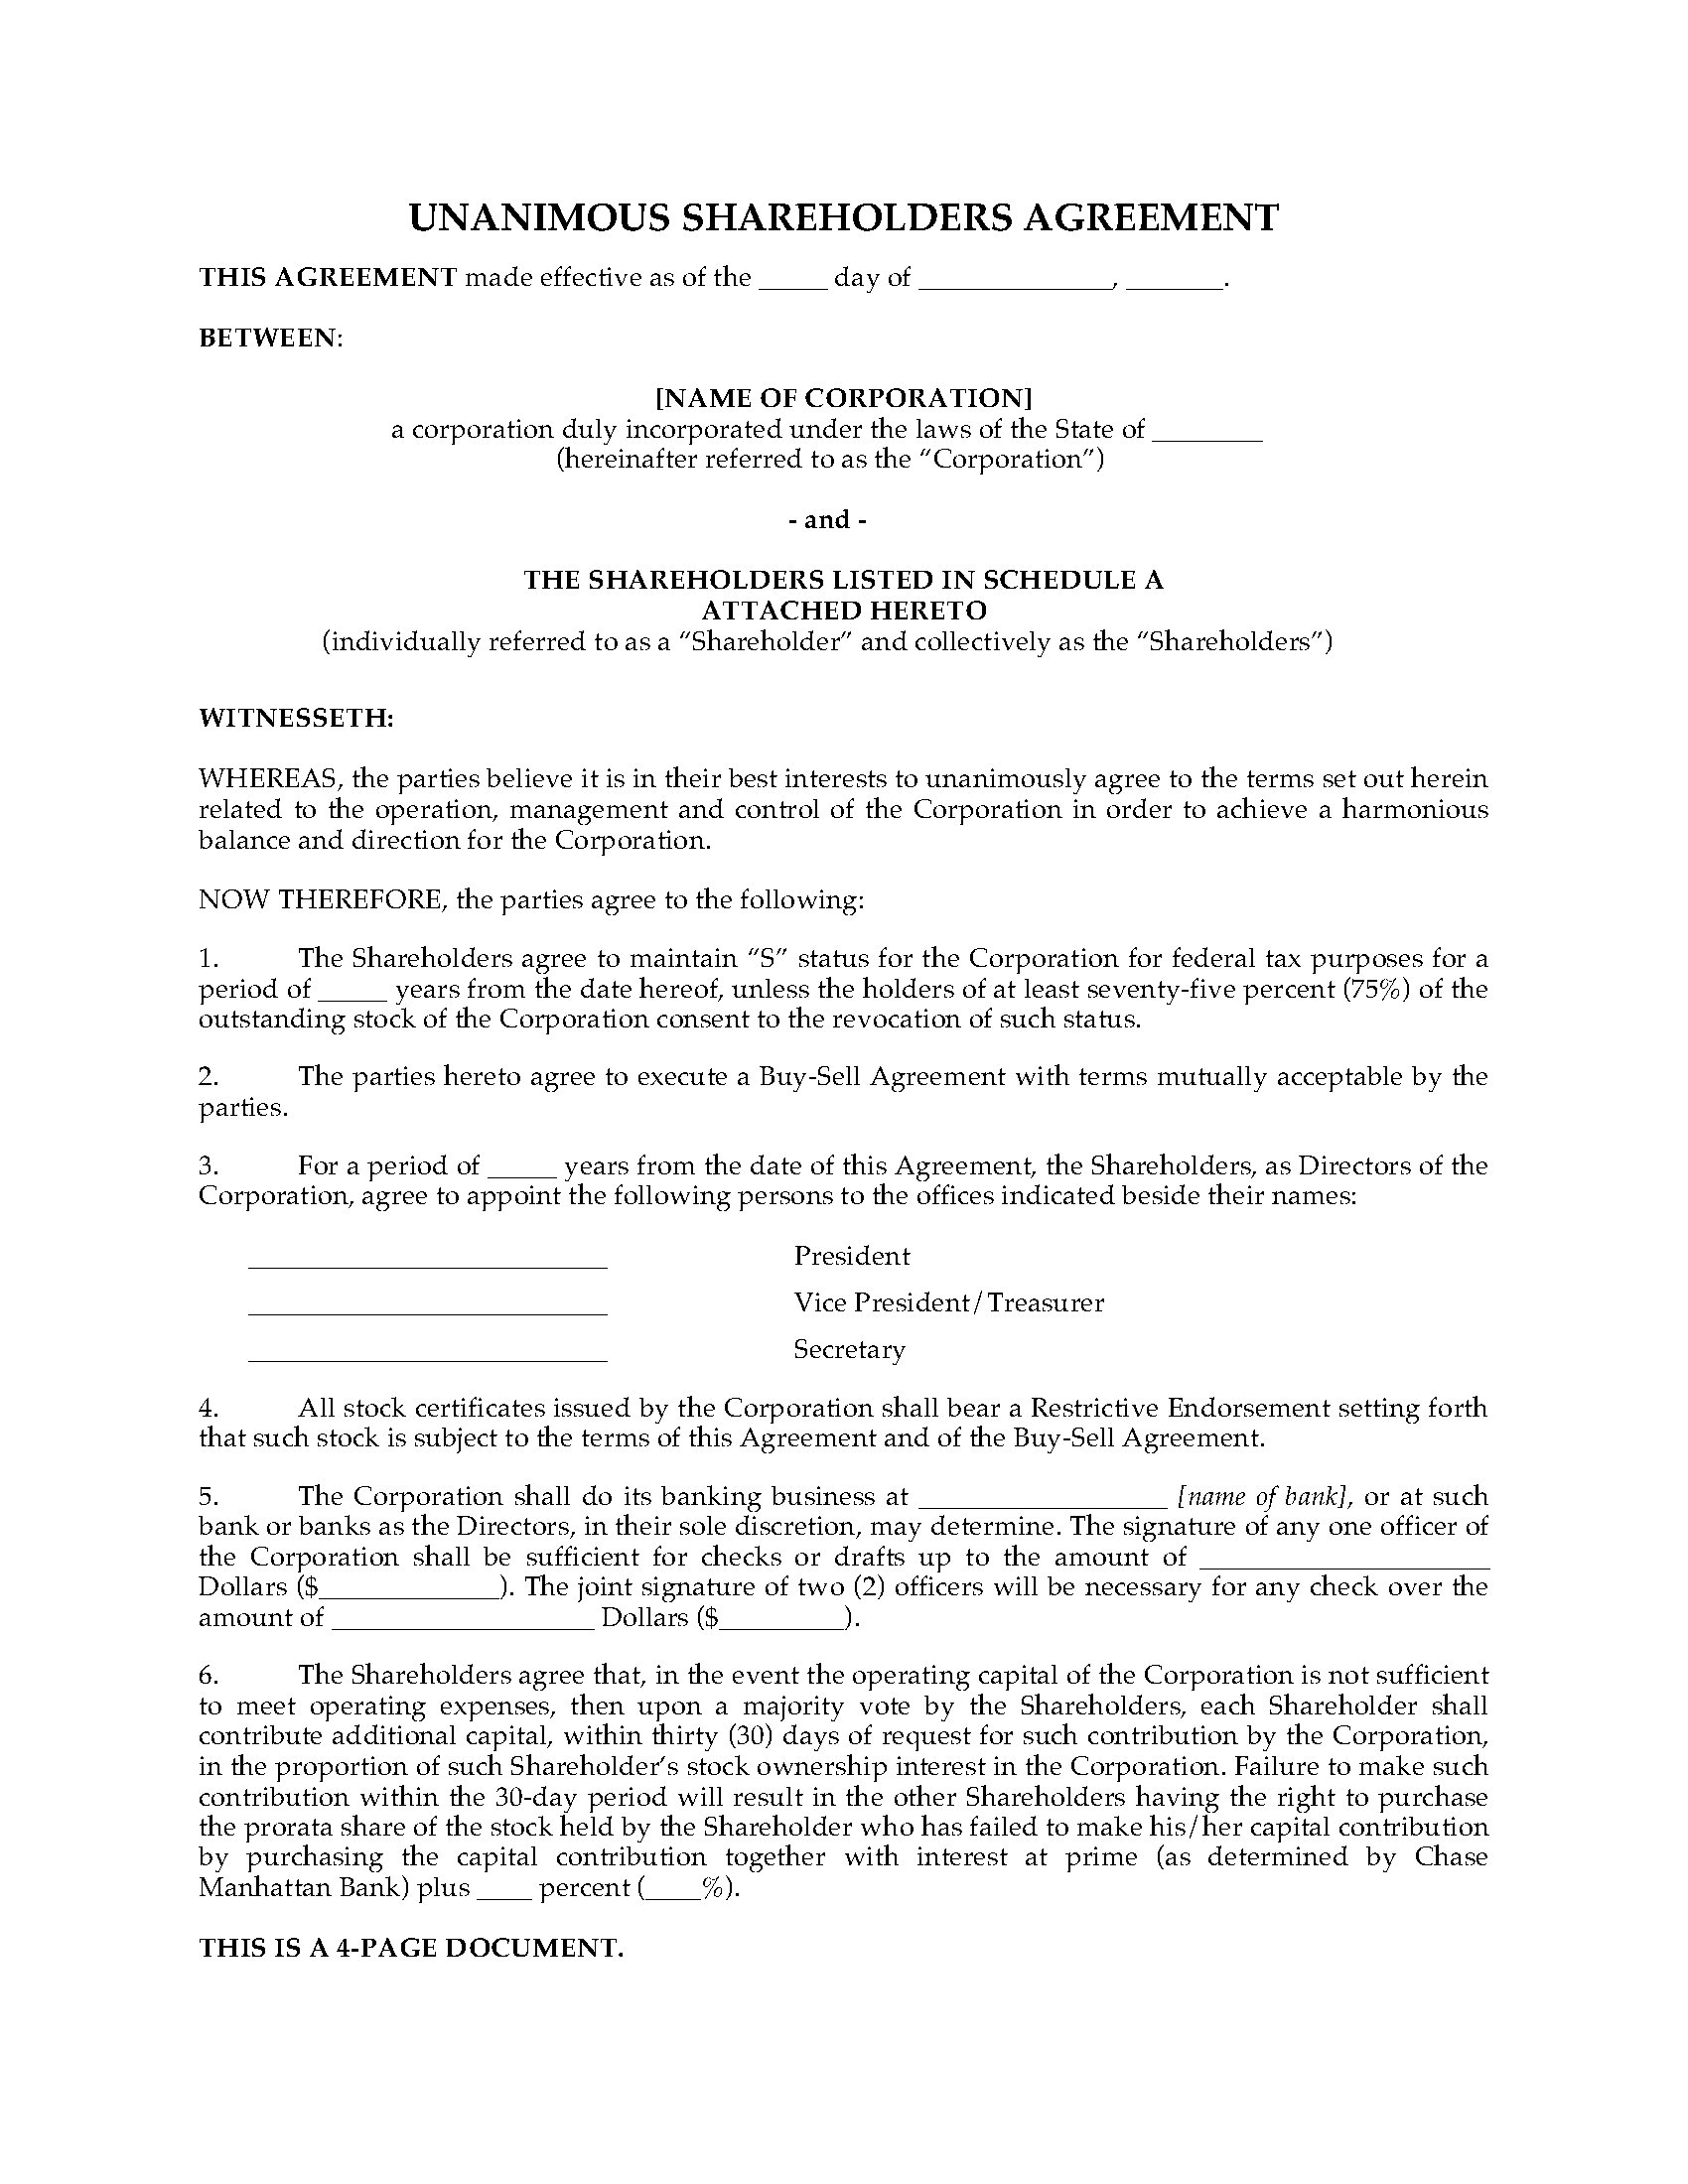 USA Shareholders Agreement for S Corporation  Legal Forms and For s corp shareholder agreement template